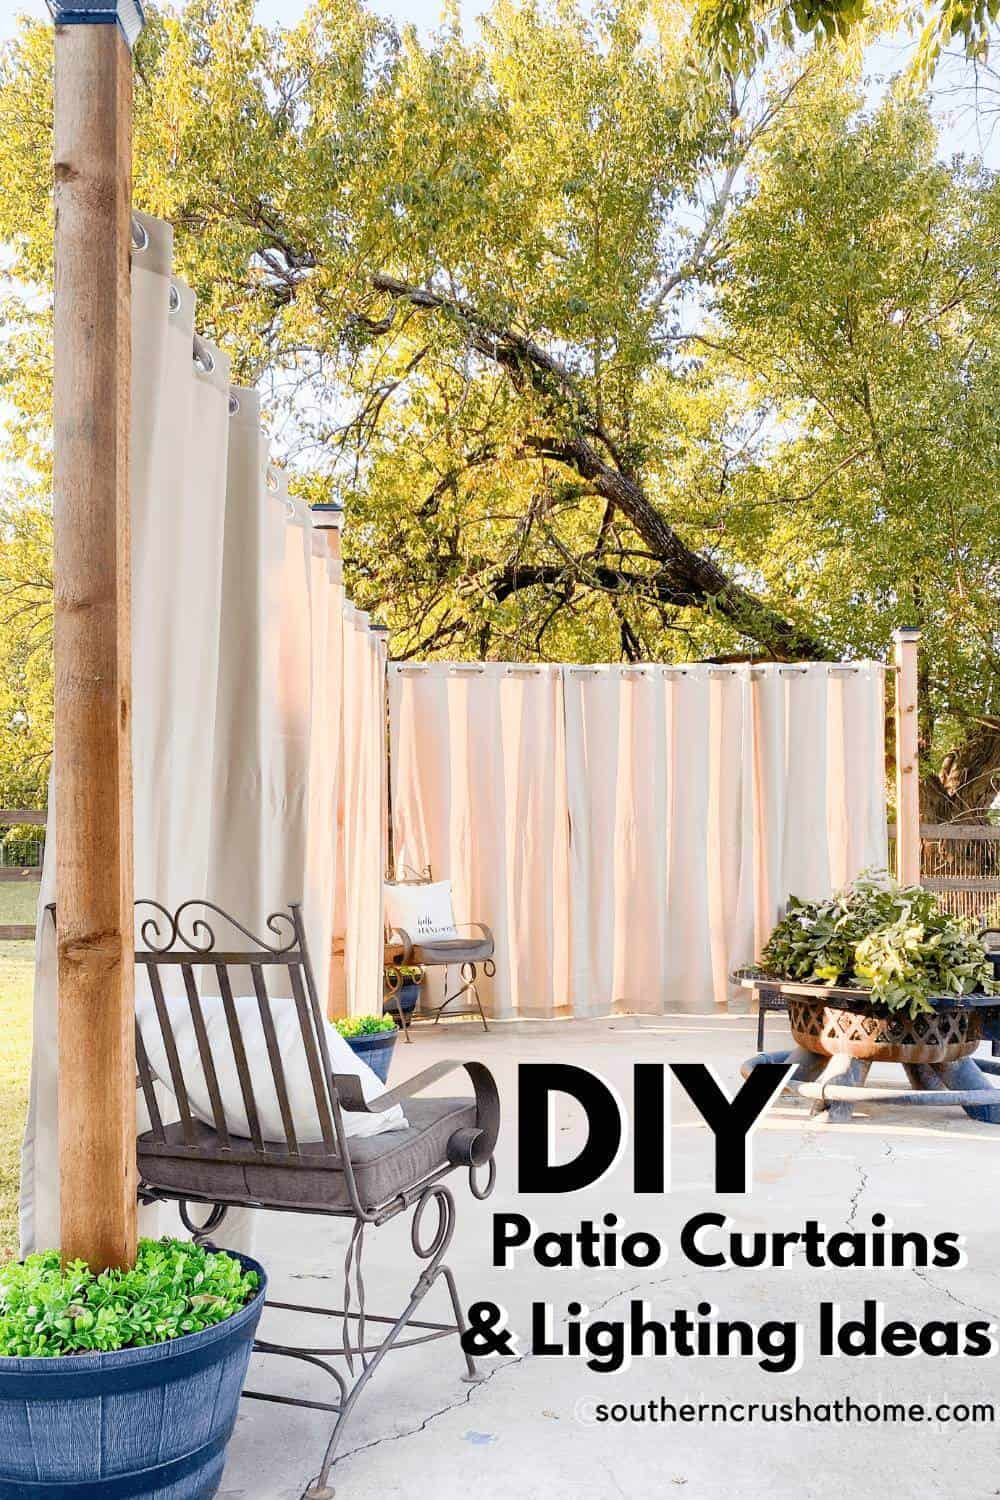 Creative Outdoor Patio Lighting & Curtains DIY + Patio String Light Ideas